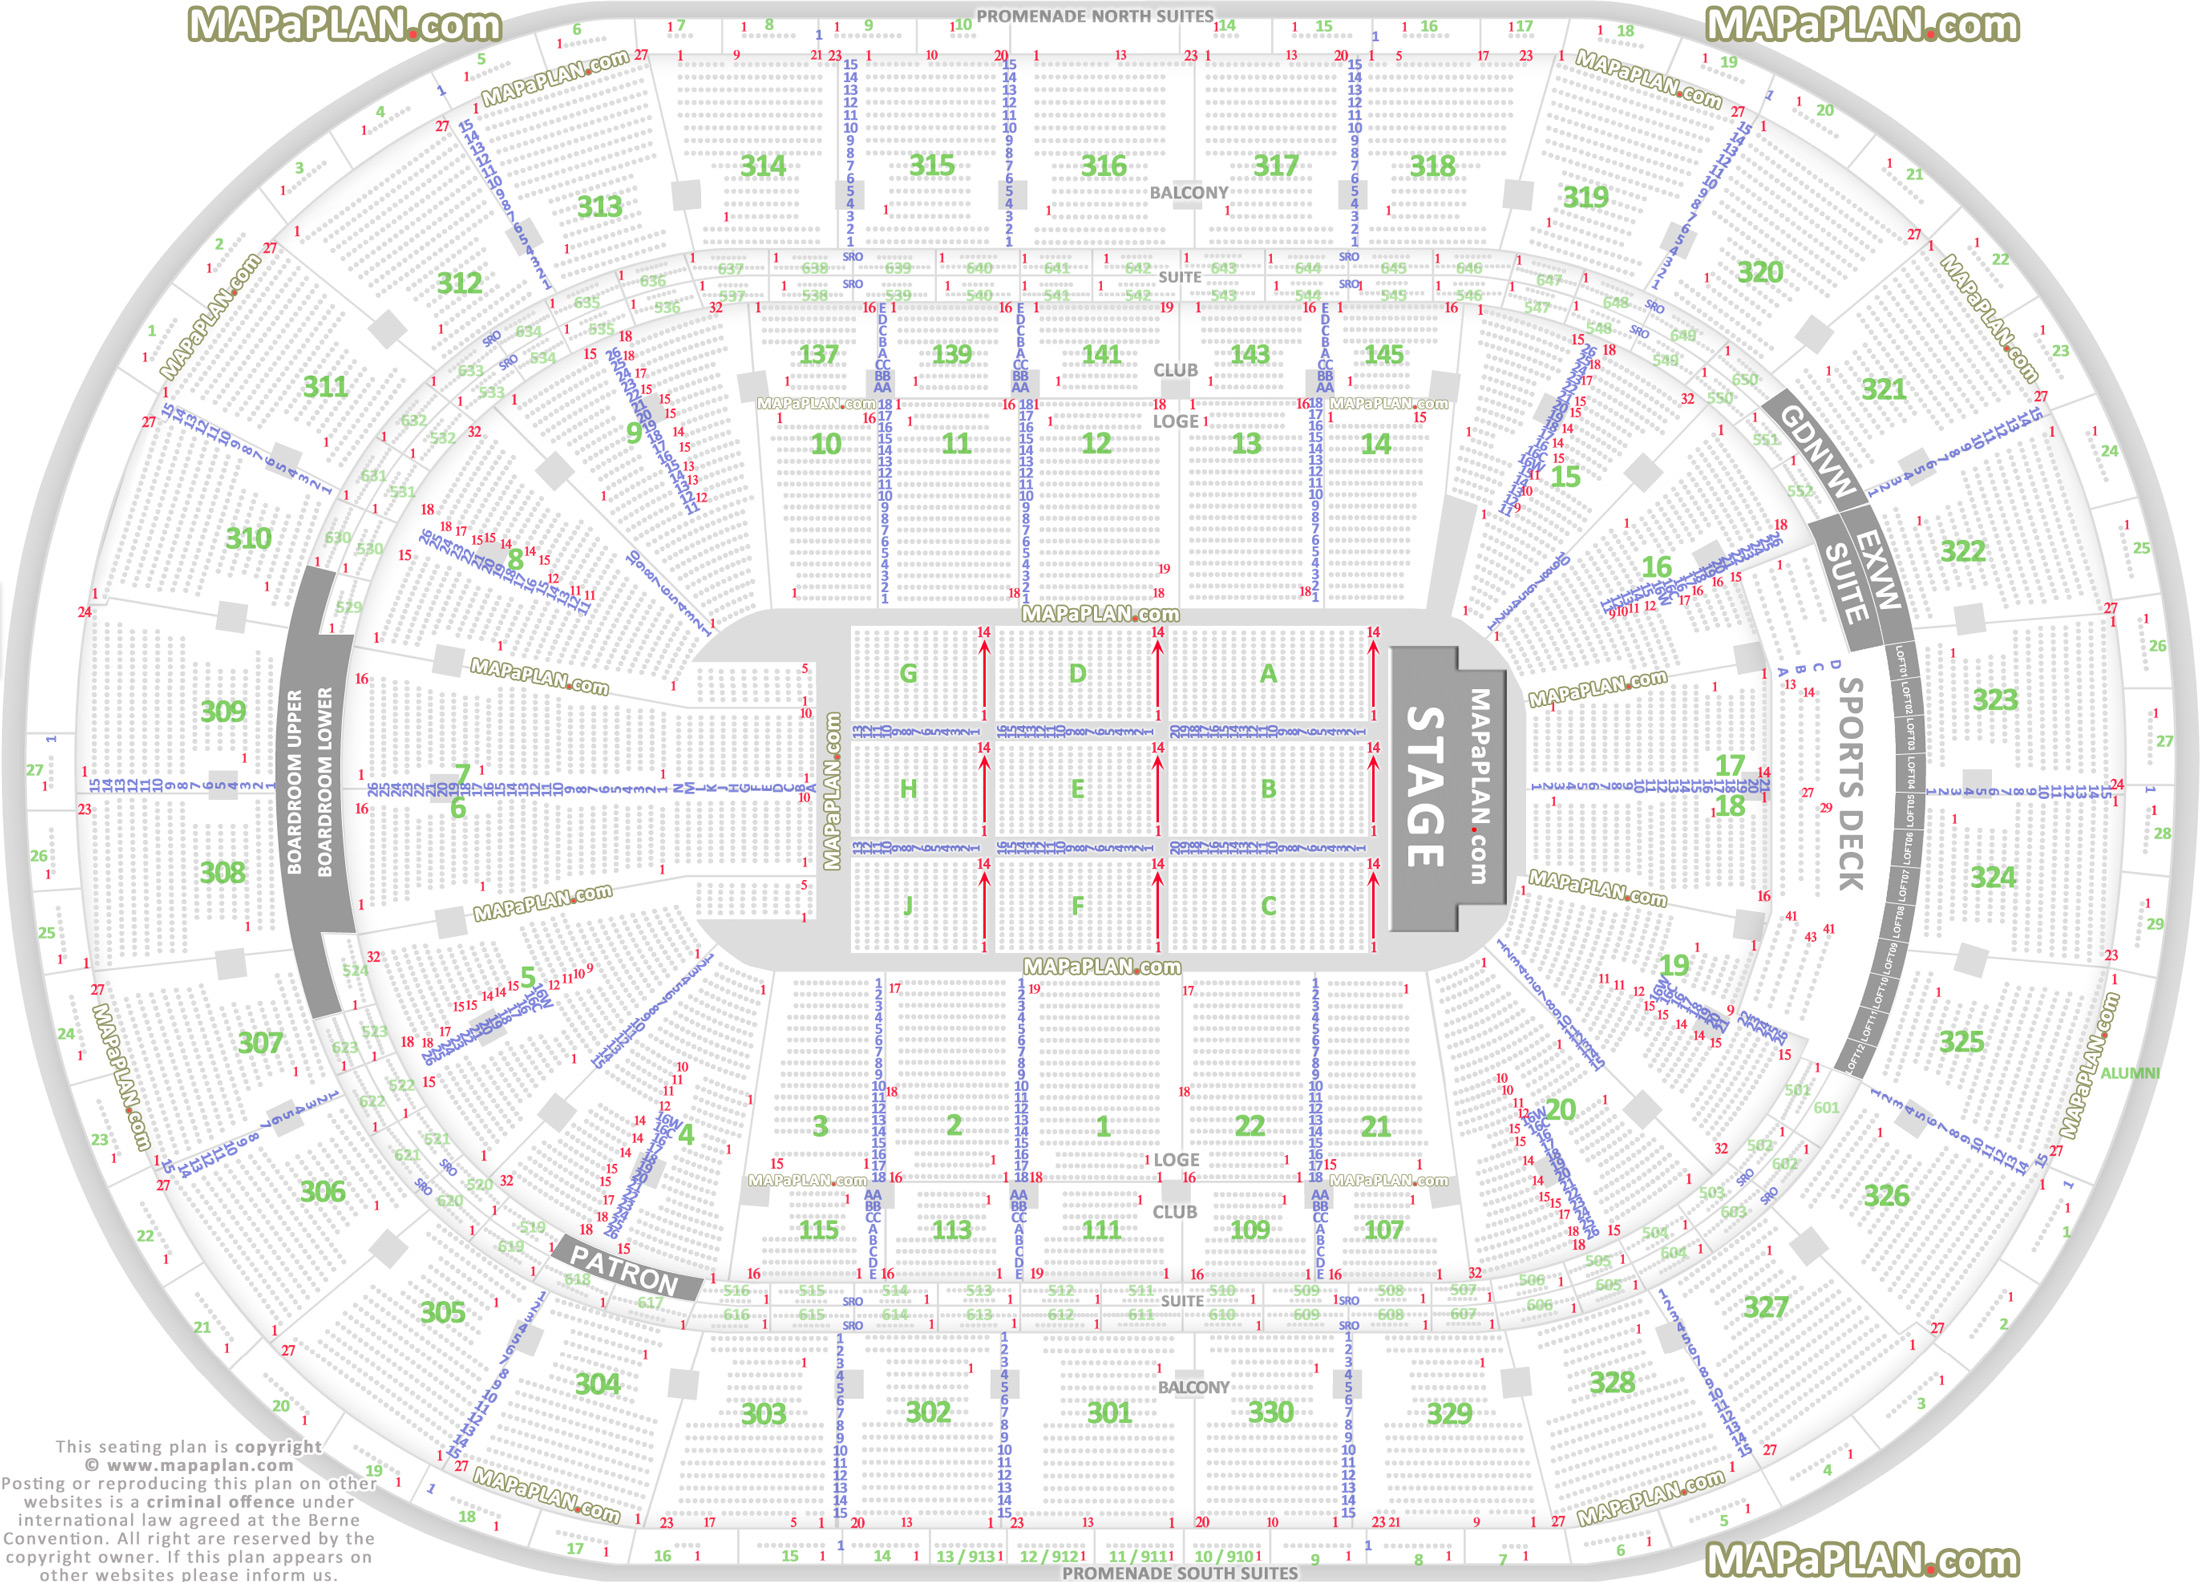 New York Knicks & Rangers Seating Chart|Madison Square Garden 